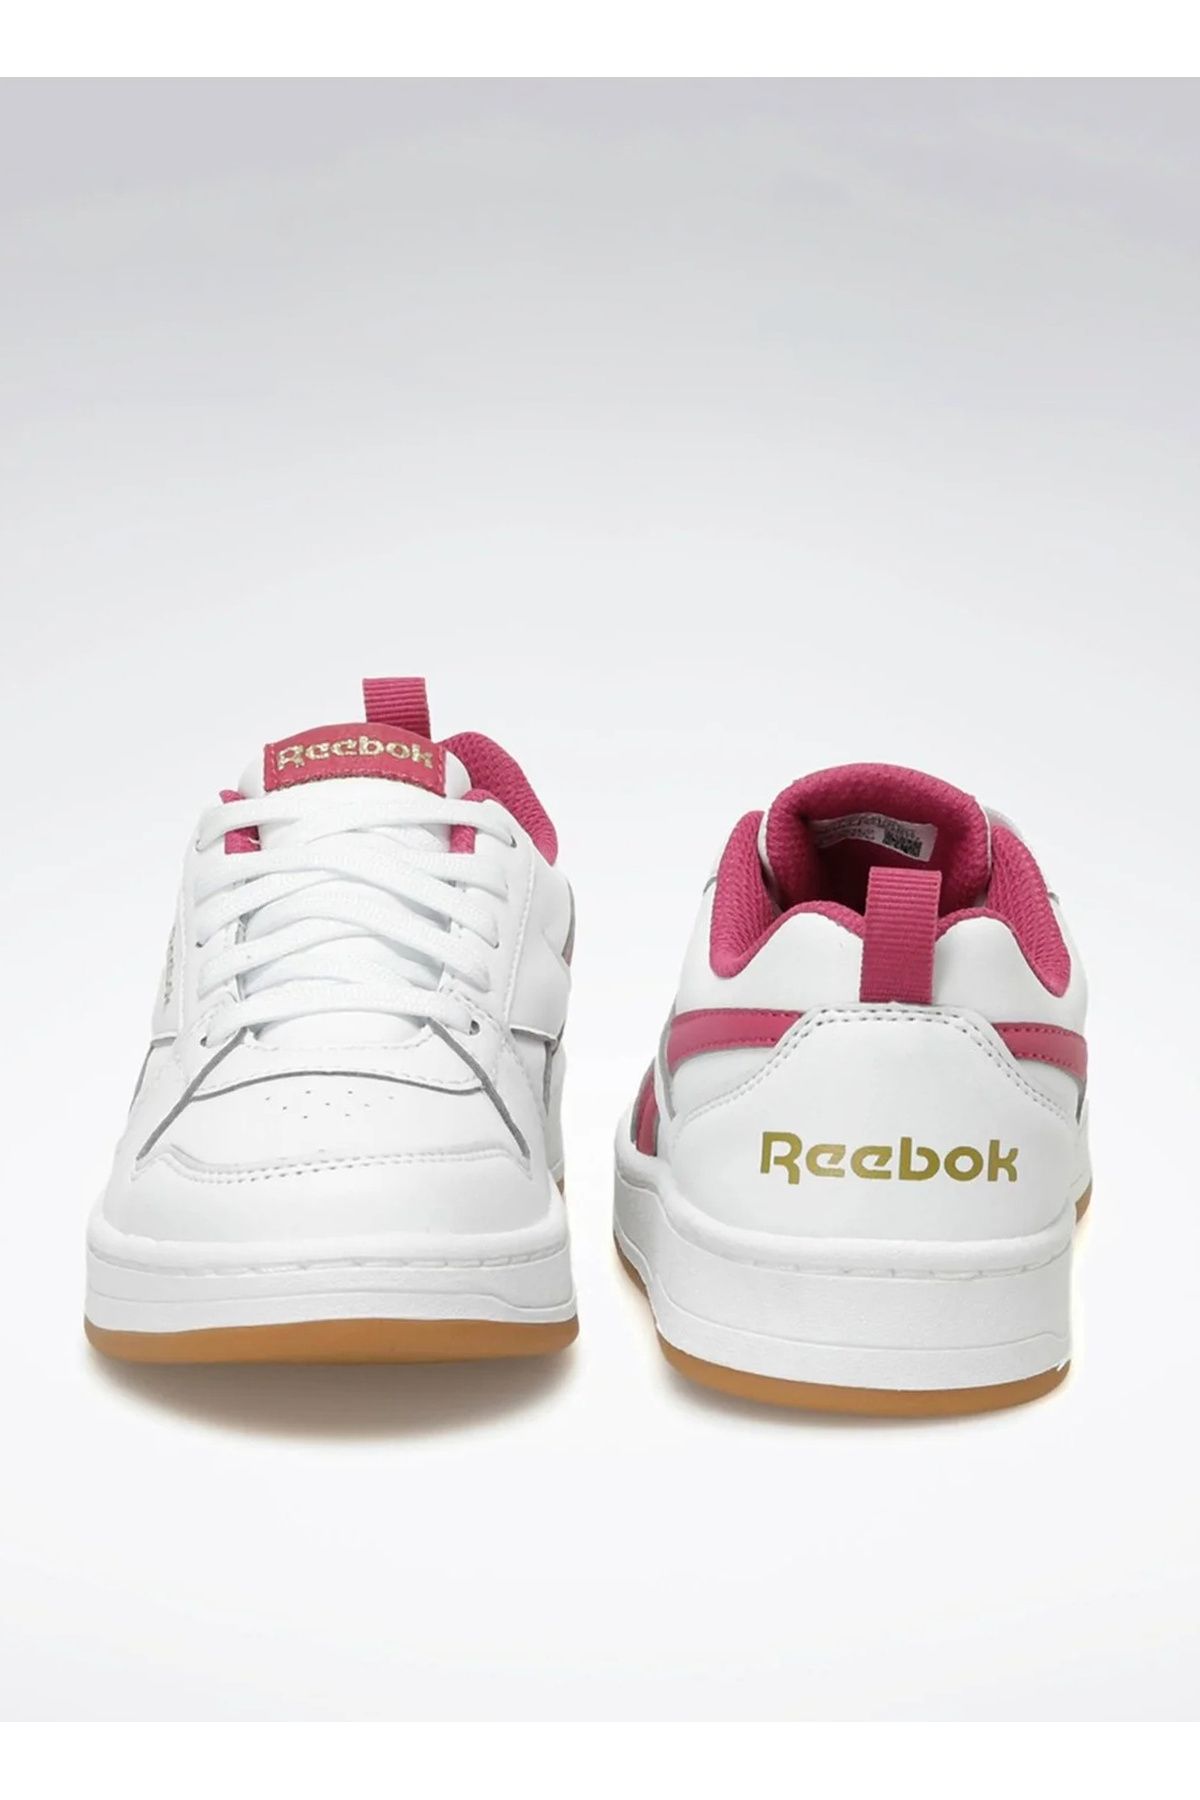 Reebok کفش های سفید در حال راه رفتن IE66667 Reebok Royal Prime 2.0